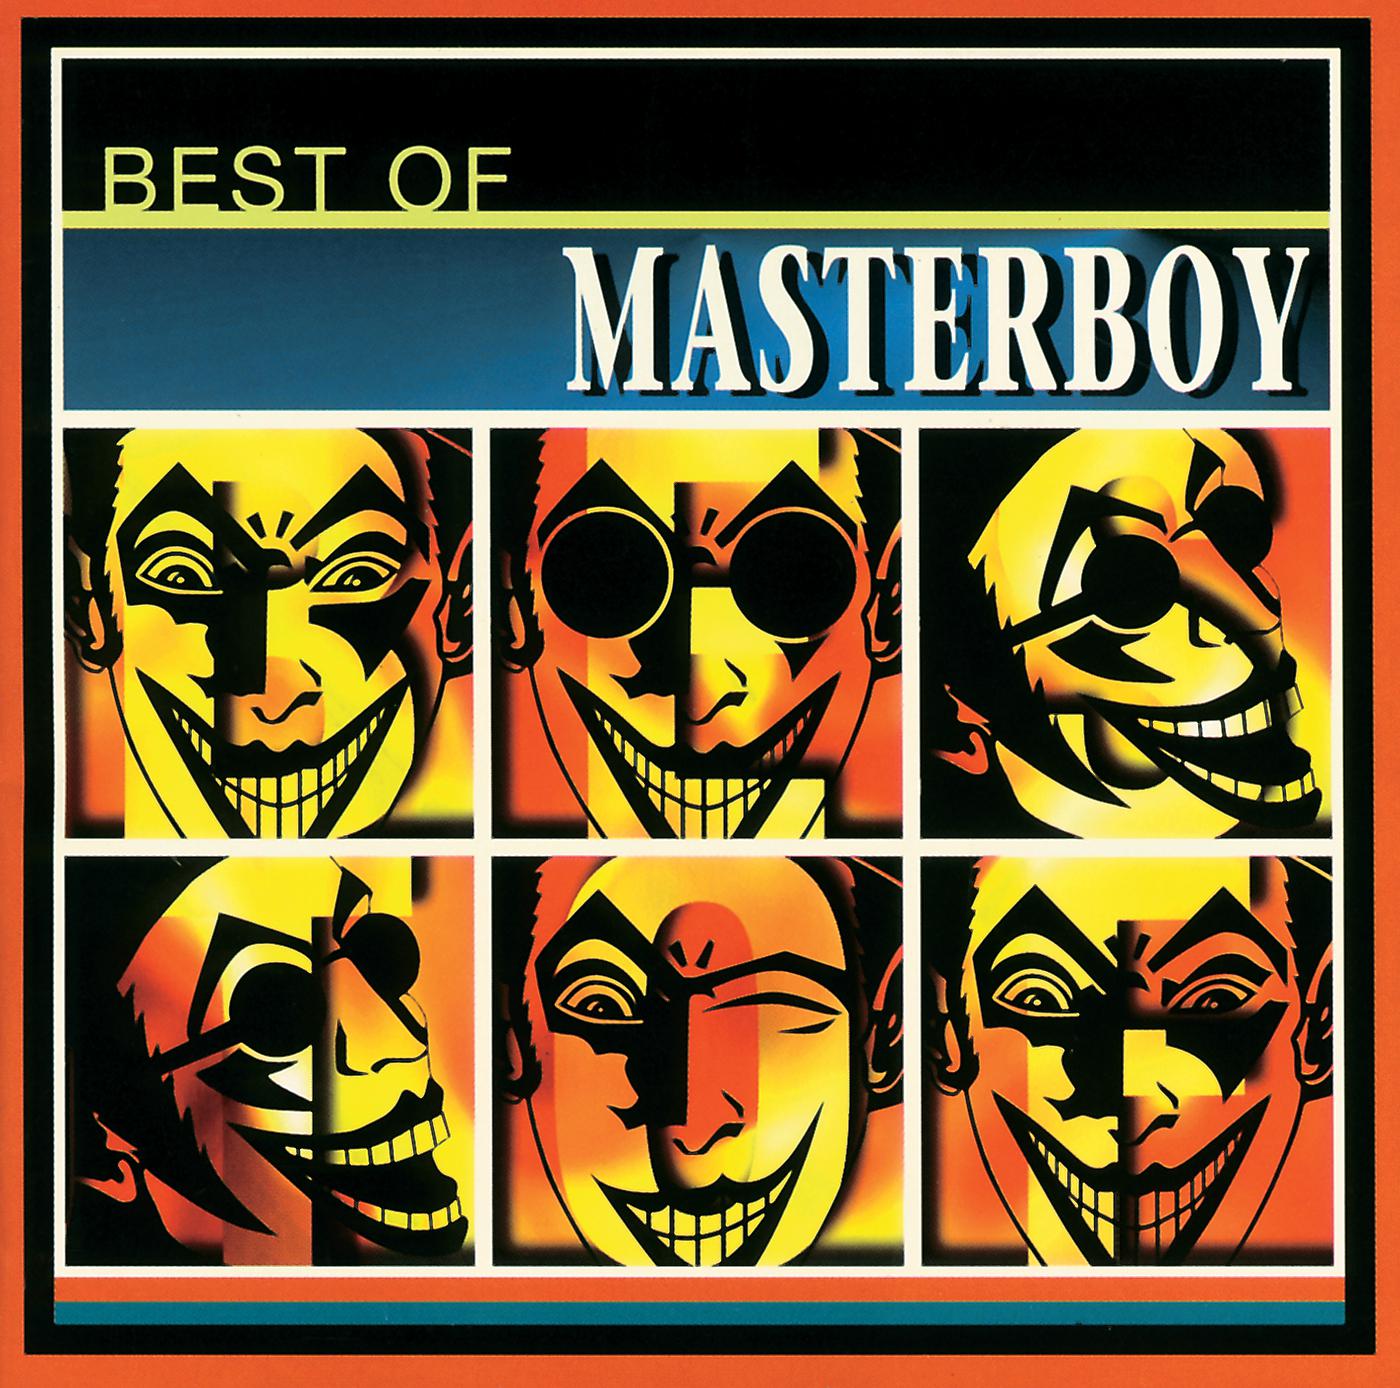 Masterboy the feeling night. Masterboy обложка. Masterboy best. Masterboy обложка альбома.